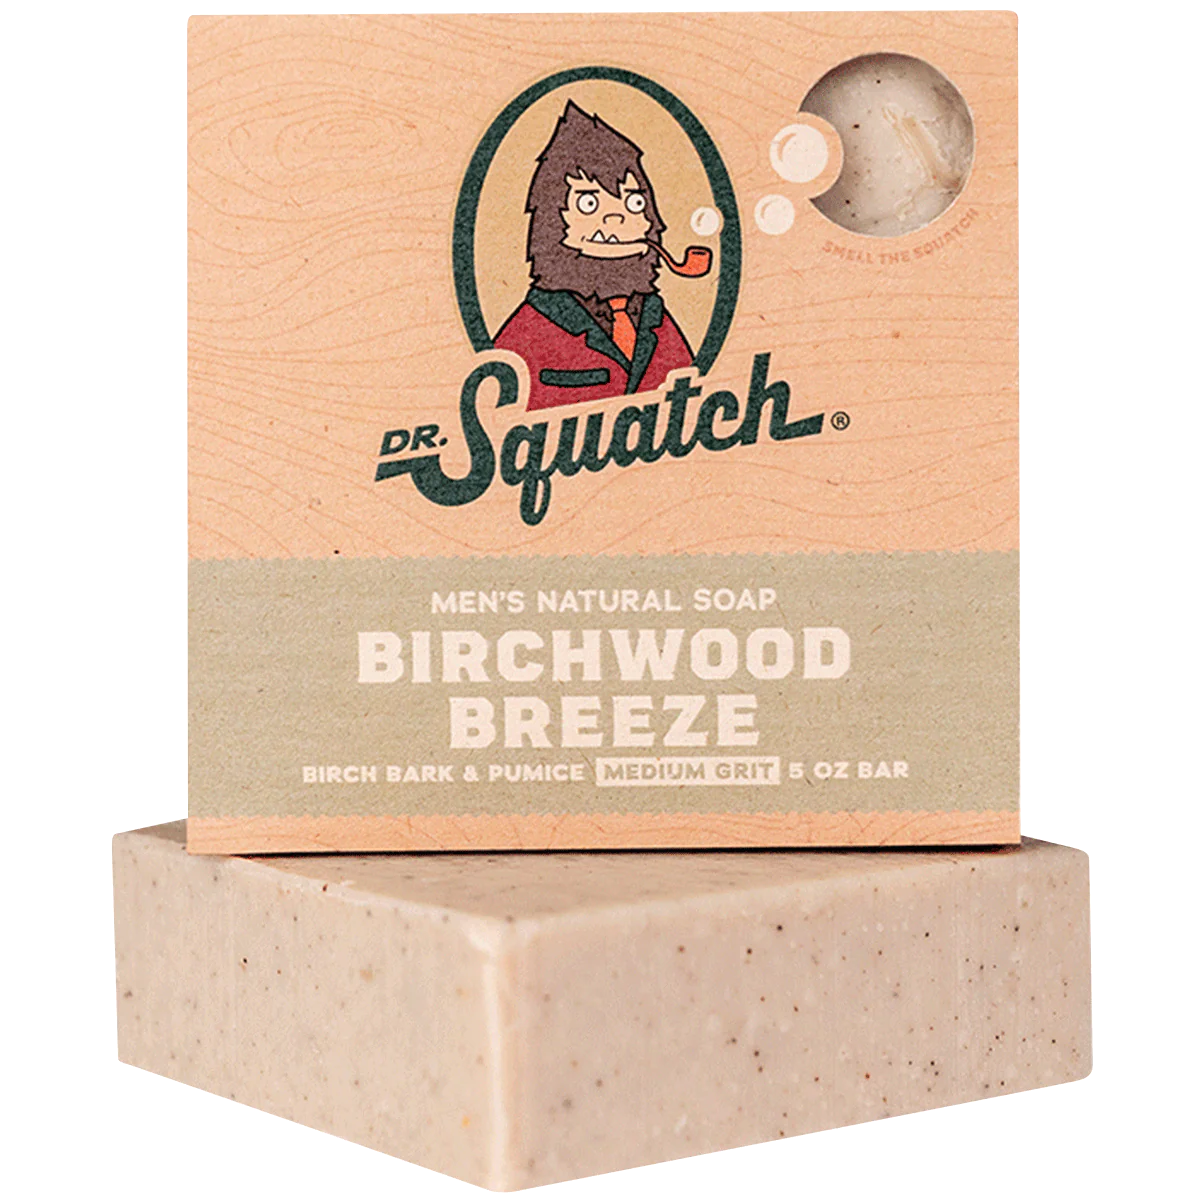 BIRCHWOOD BREEZE Dr. Squatch bar soap